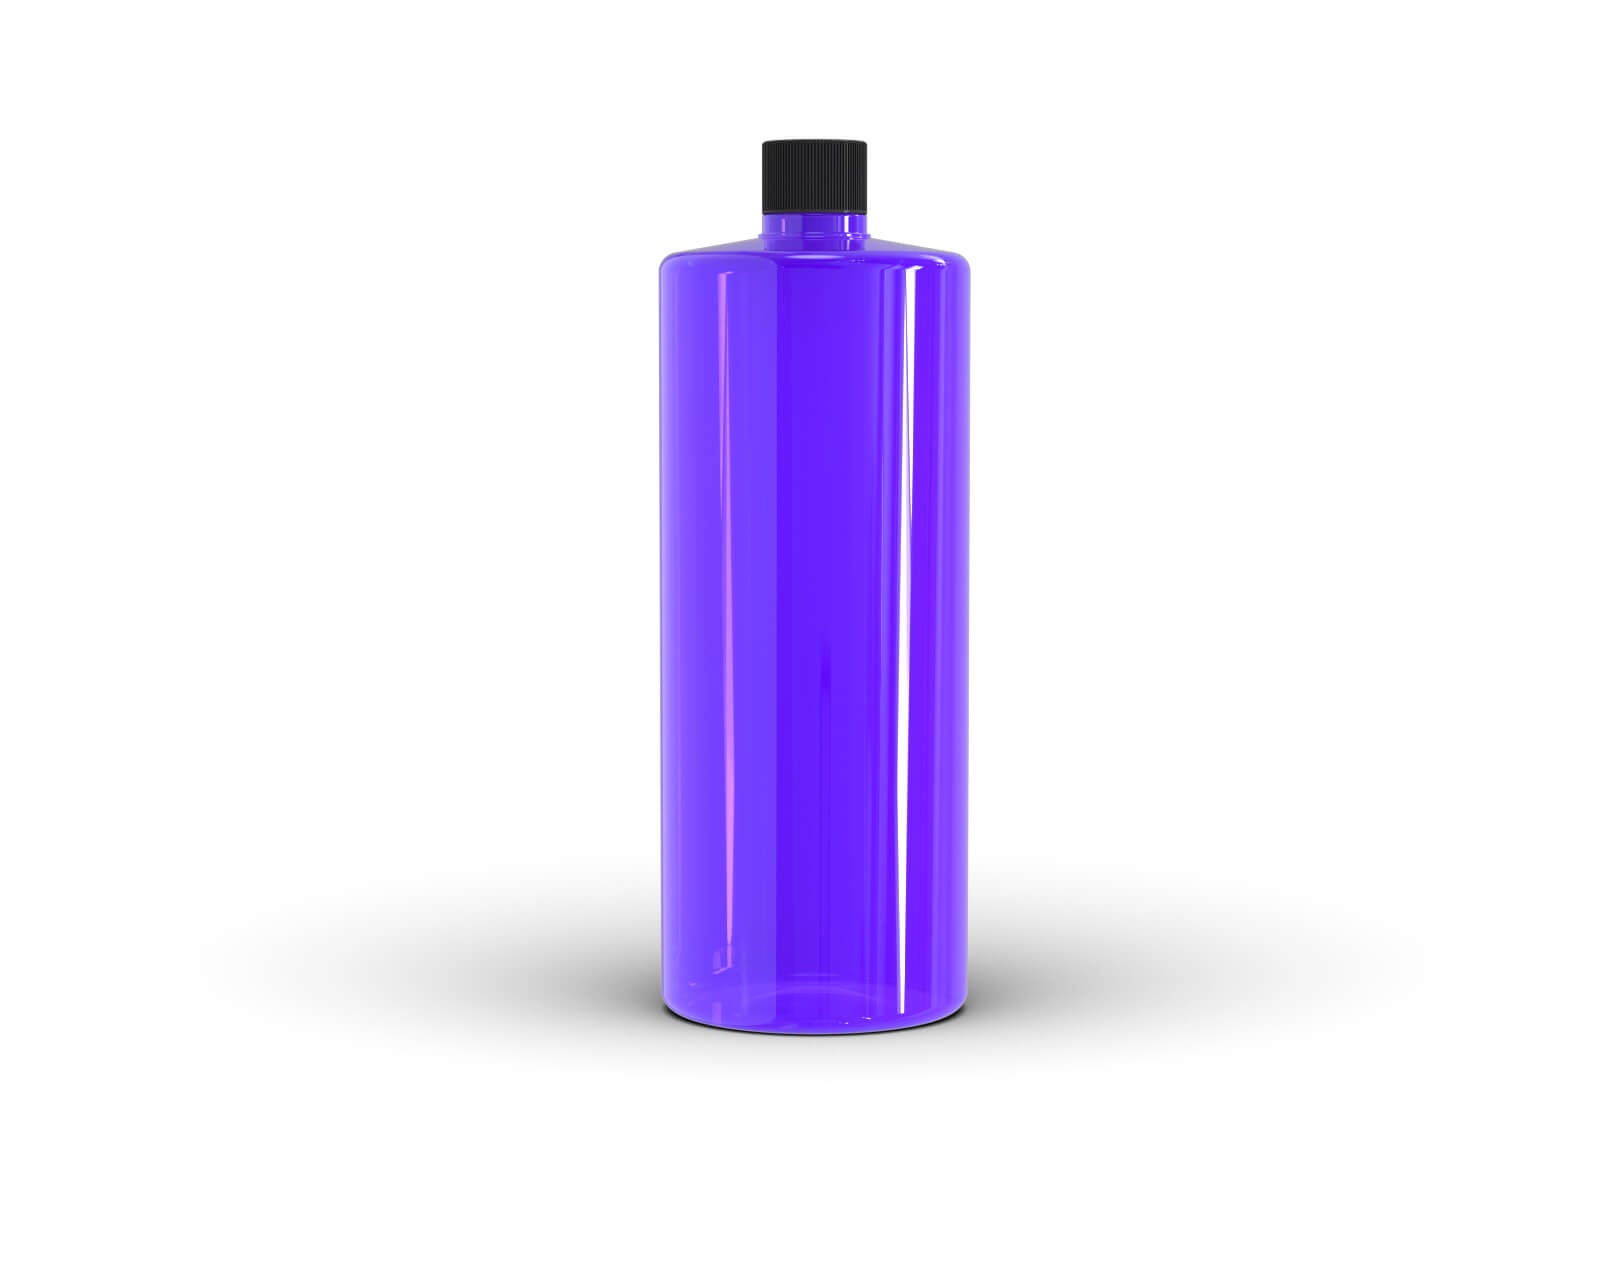 PrimoChill Ice - Low-Conductive Coolant (32 oz.) - PrimoChill - KEEPING IT COOL UV Purple